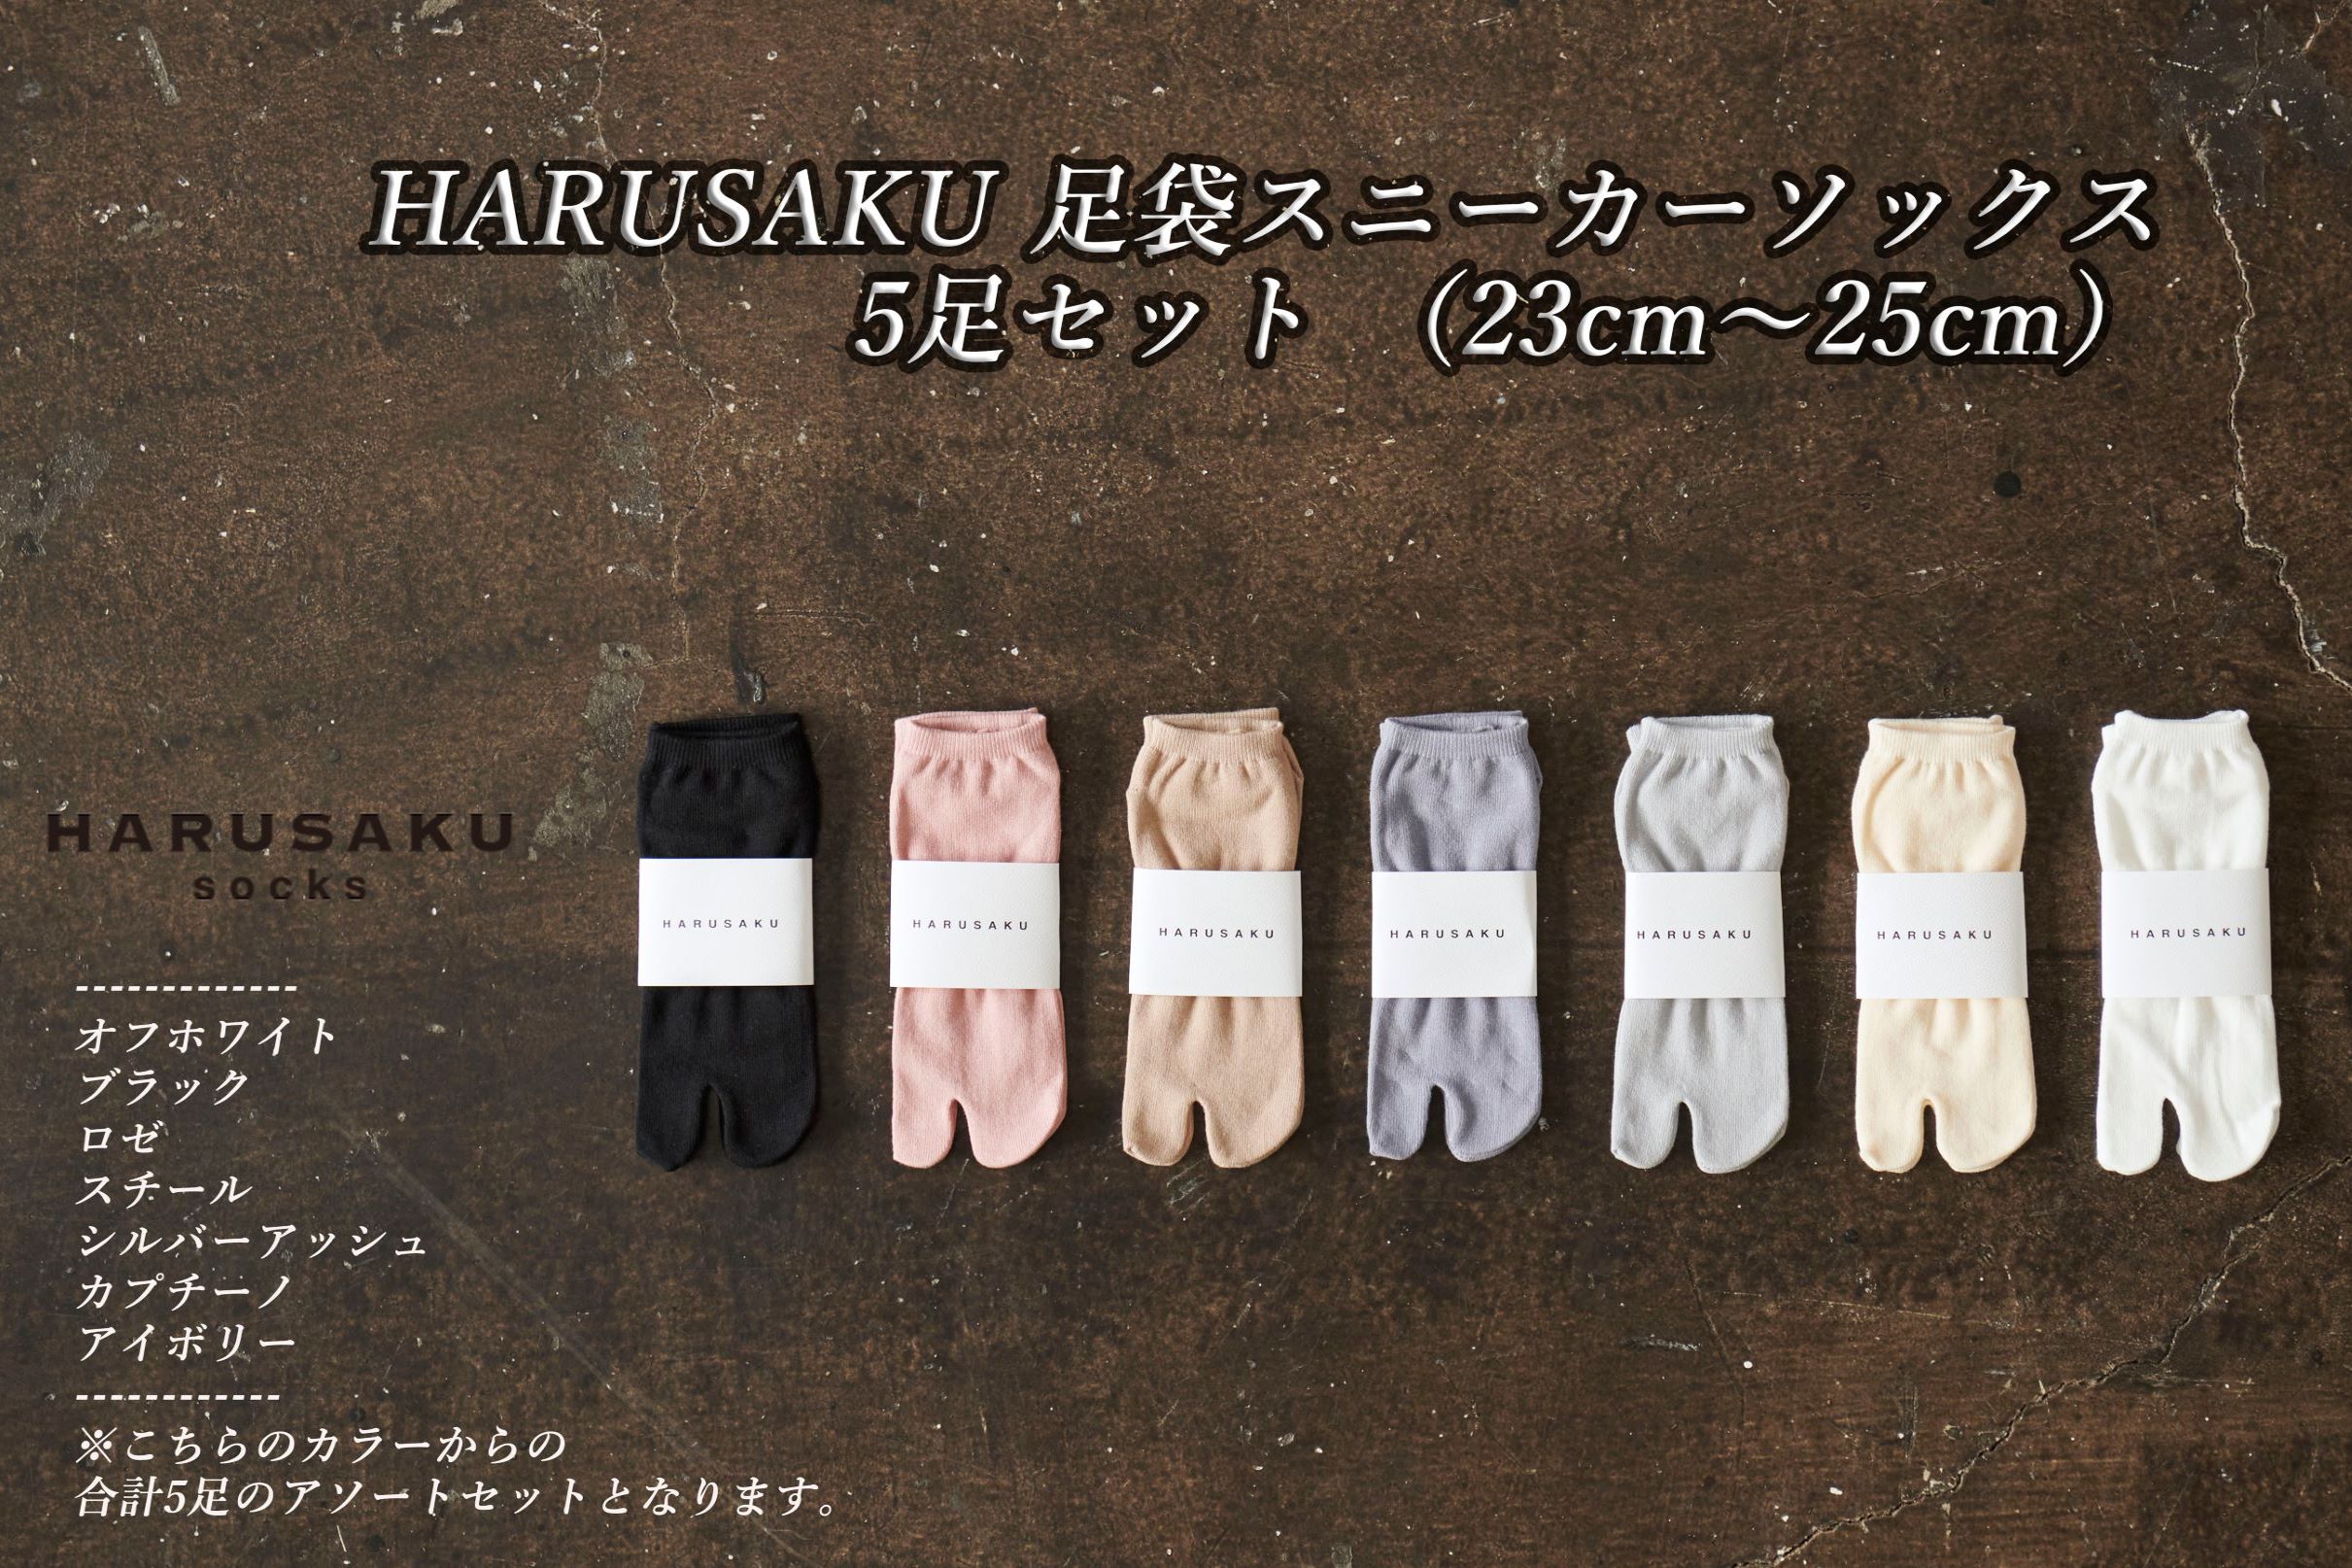 HARUSAKU 足袋スニーカーソックス 5足セット （23cm〜25cm）/ 婦人 レディース 紳士 メンズ 足袋 おしゃれ シンプル カジュアル ビジネス/ 消臭 靴下 日本製